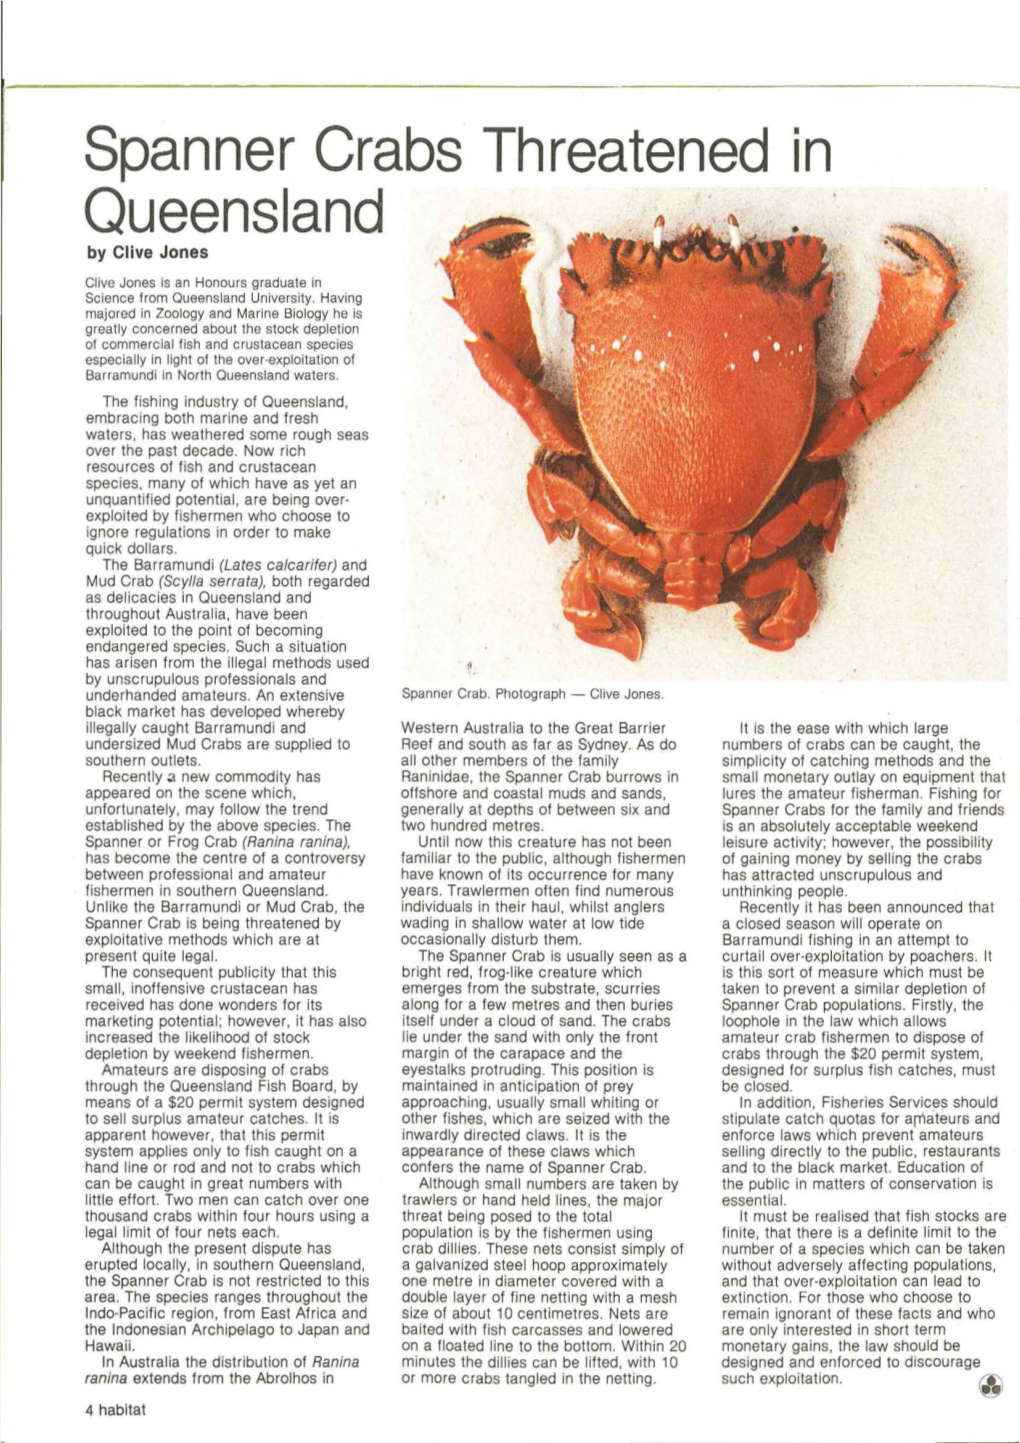 Spanner Crabs Threatened in Queensland by Clive Jones